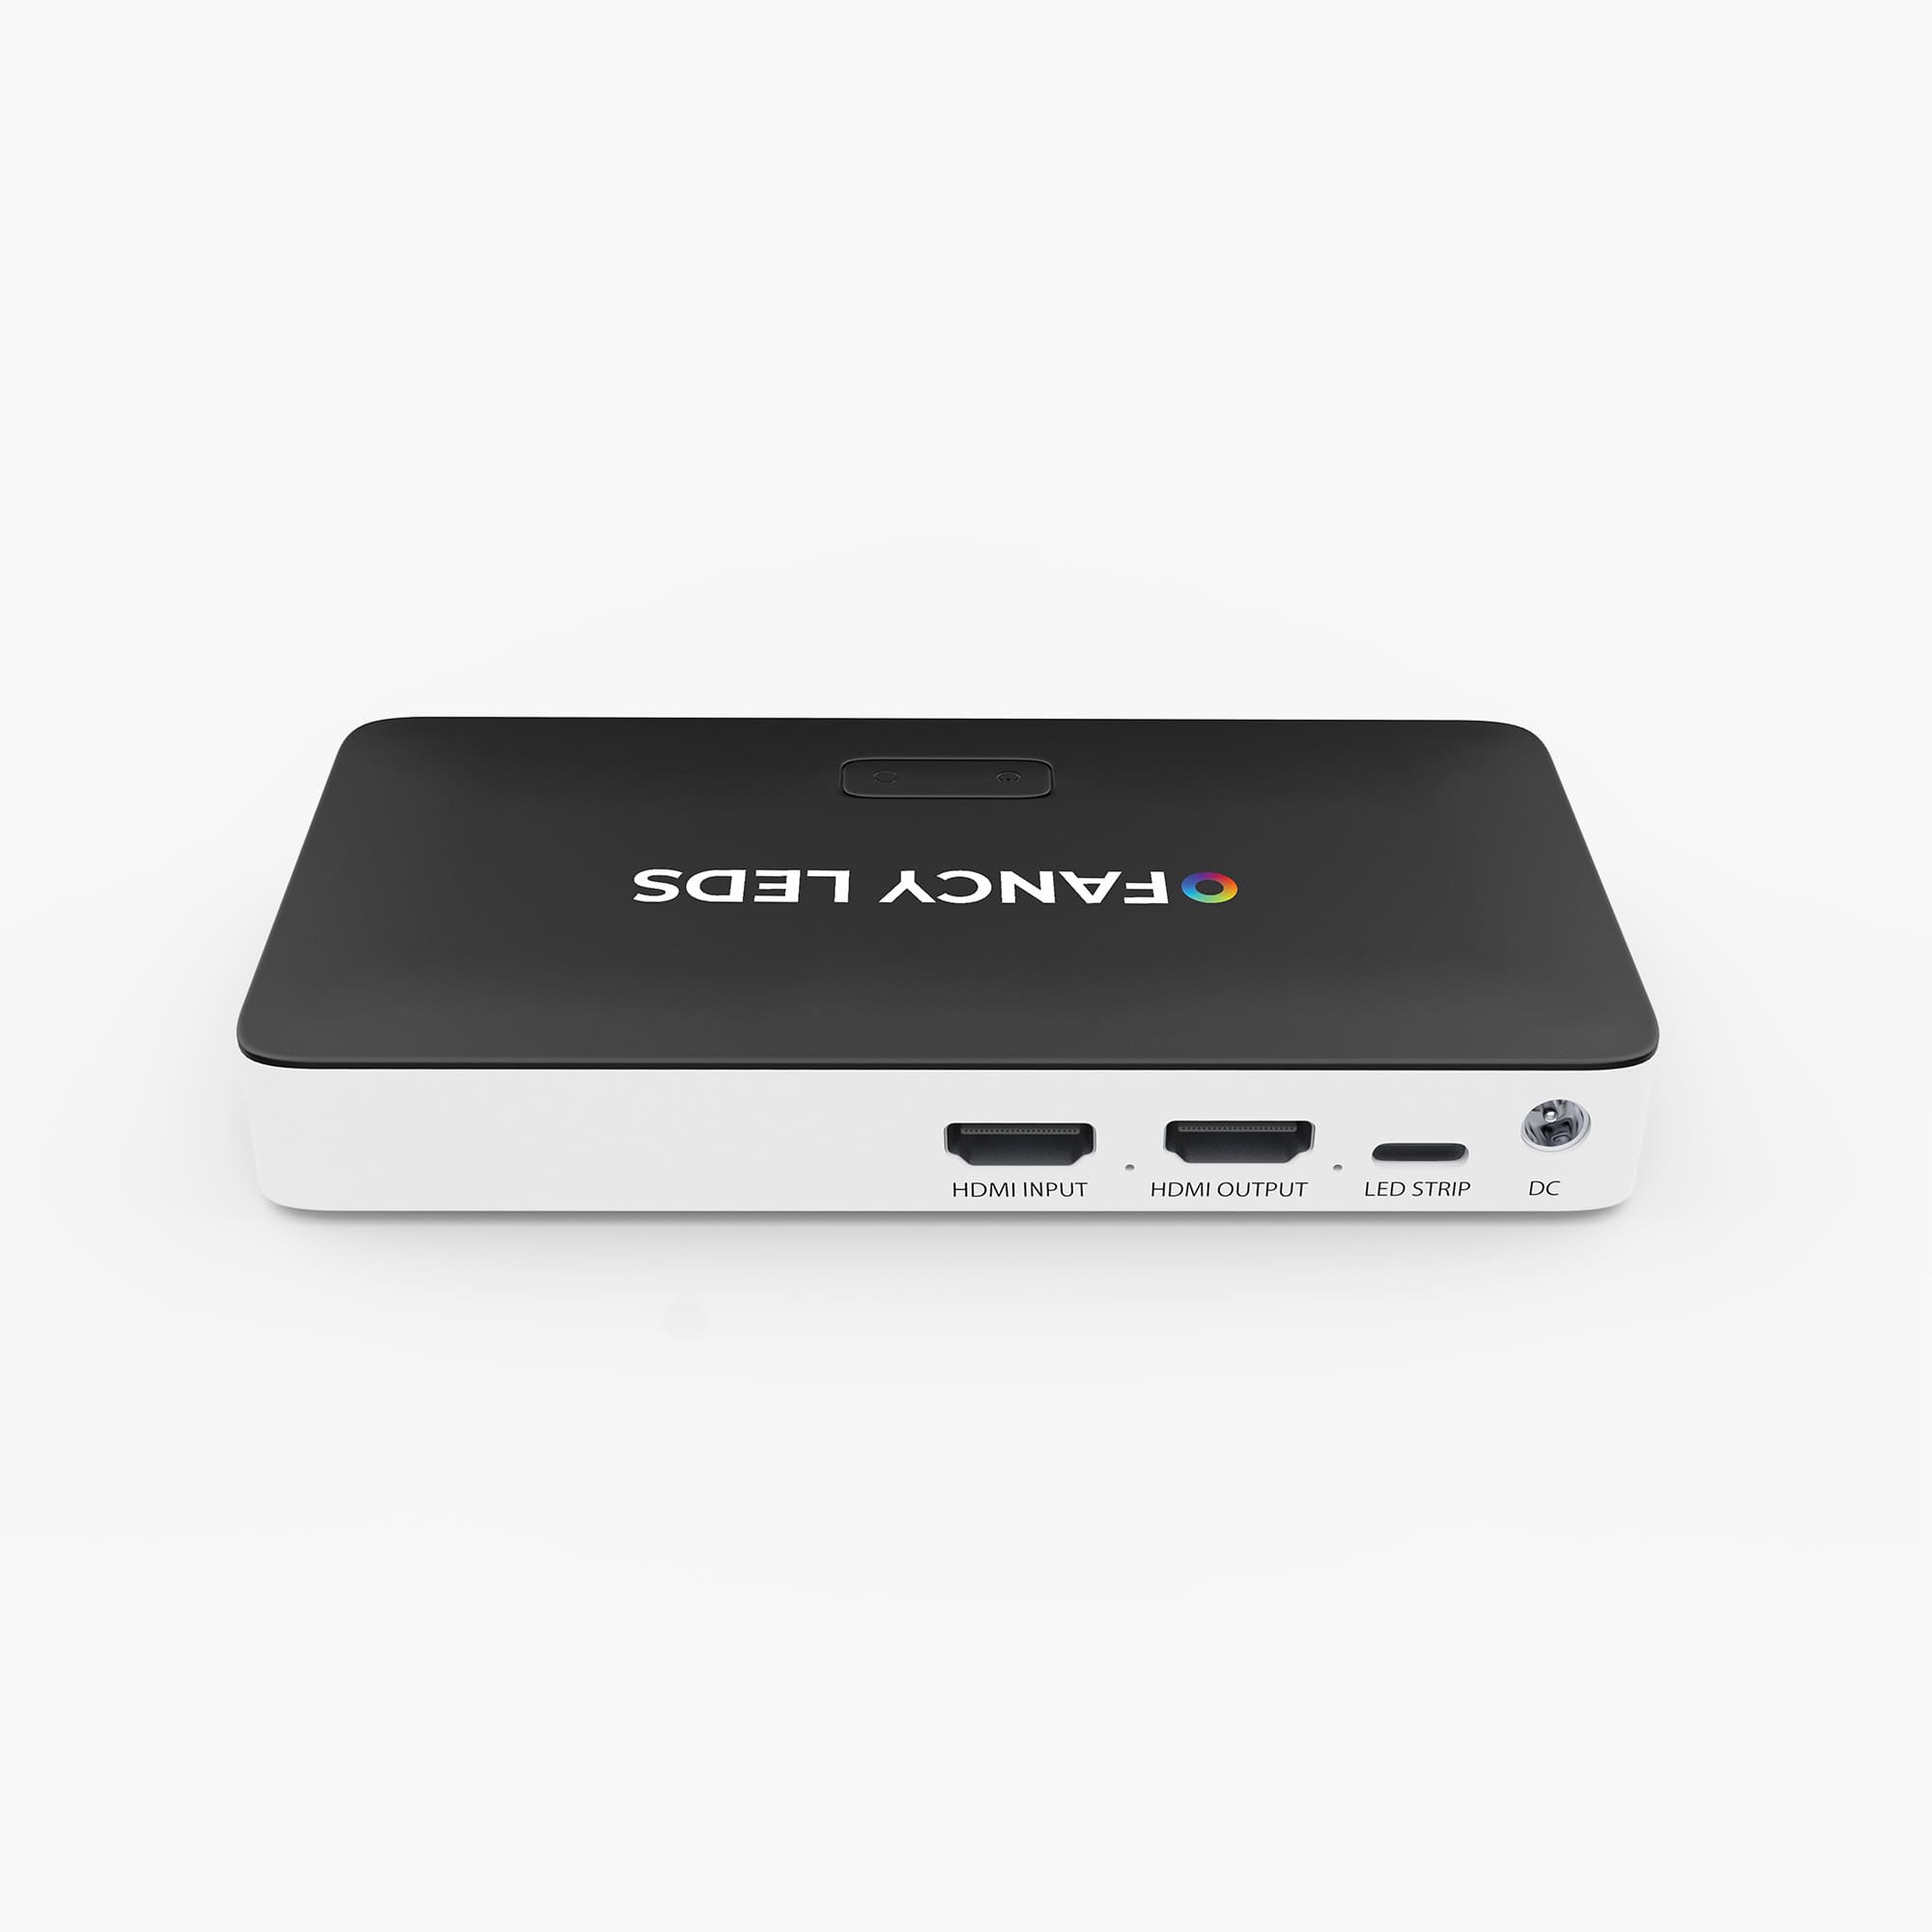 Smart TV Box HDMI Input, Best Android TV Box HDMI input, Android streaming box  HDMI Input